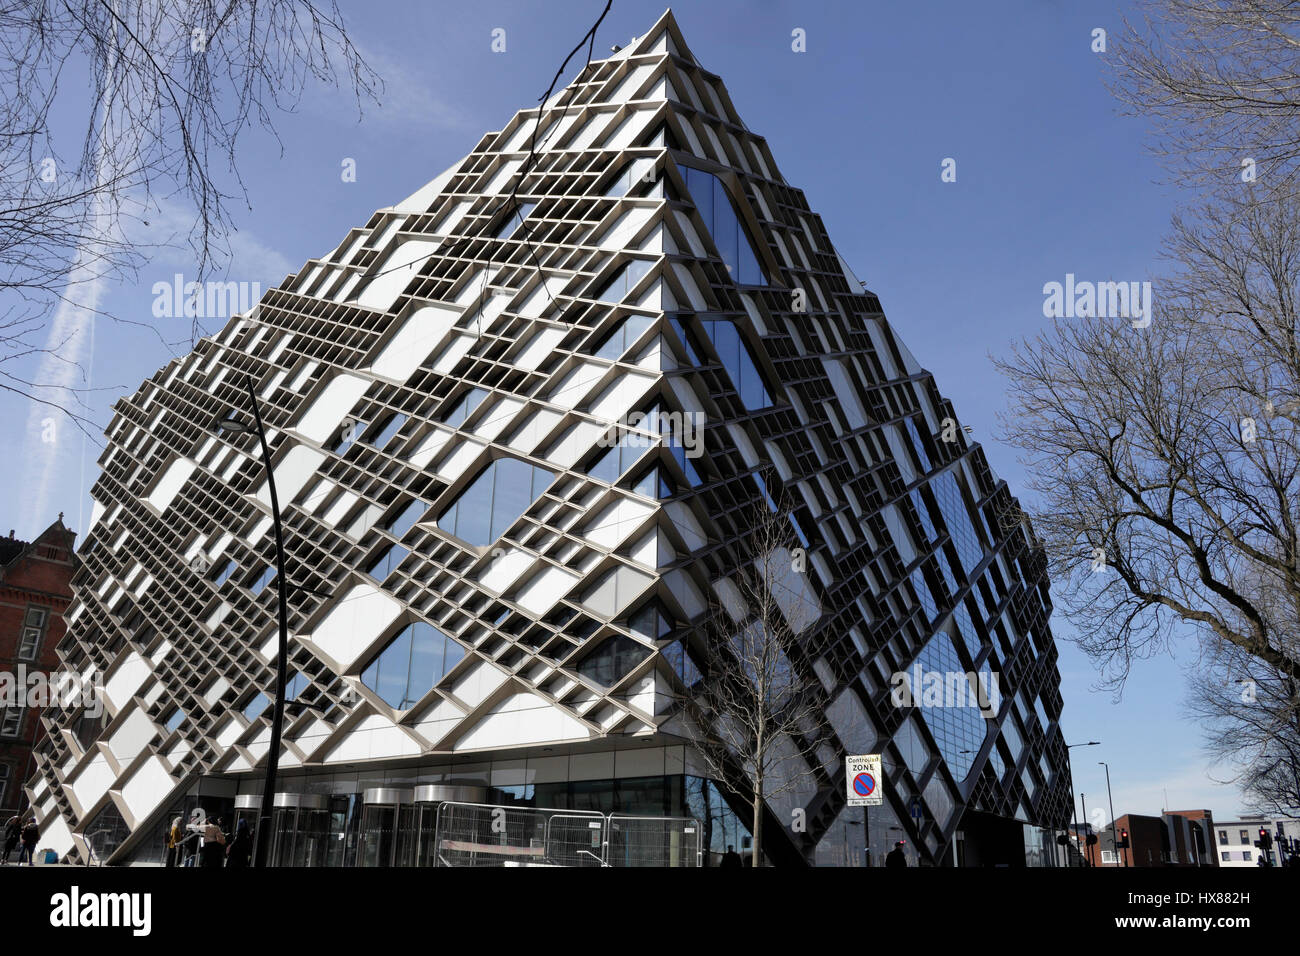 Diamond building at Sheffield university, England UK, Award winning Modern architecture British Higher education Stock Photo